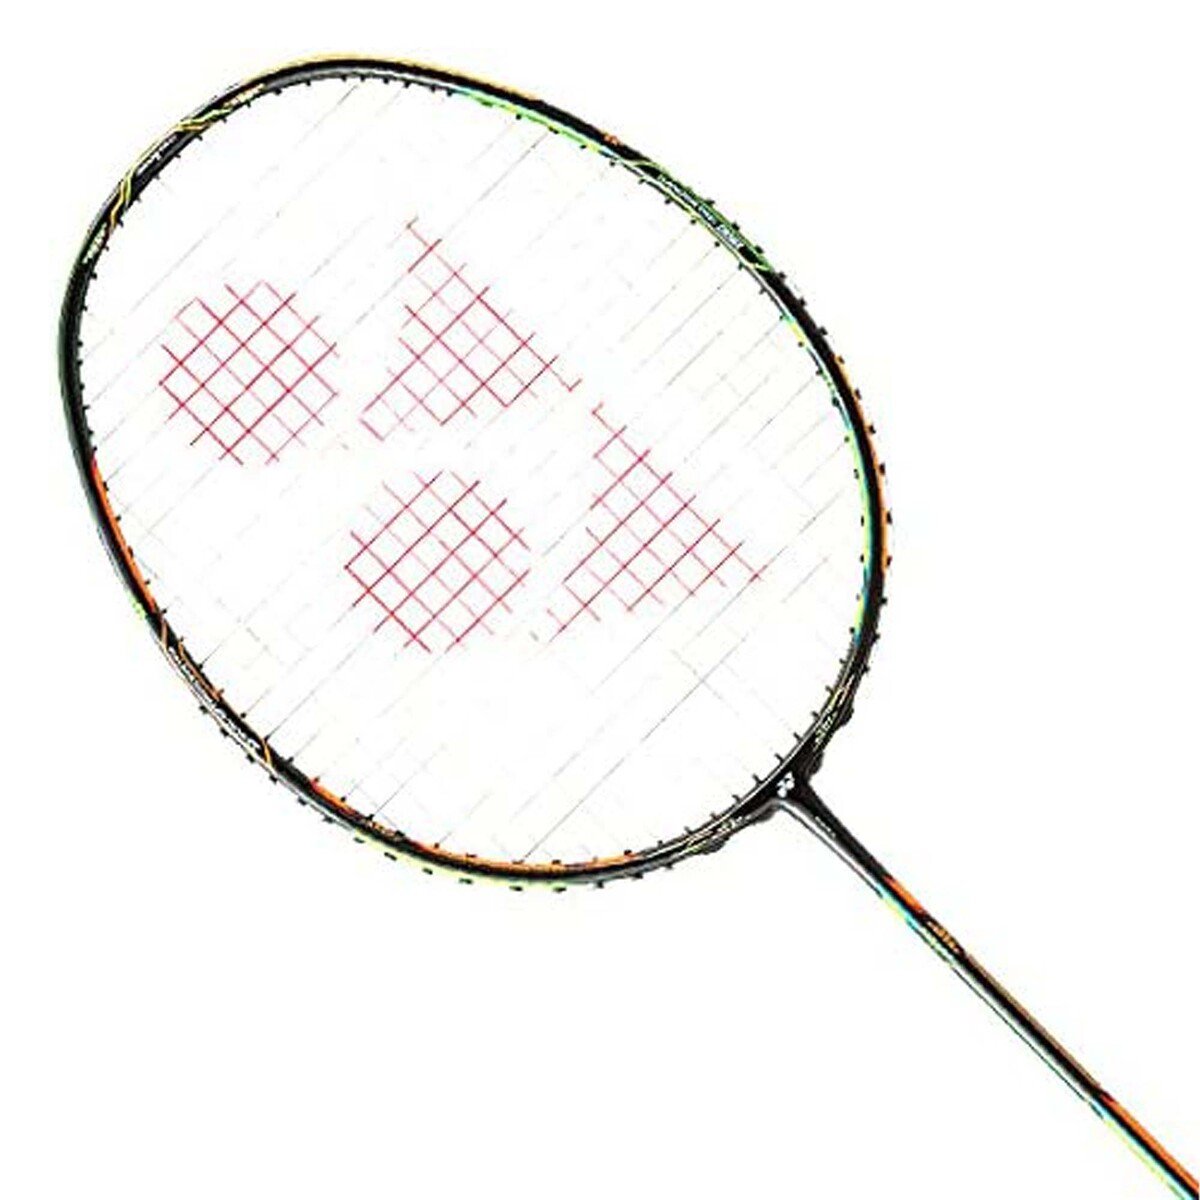 Yonex Unstrung Badminton Racket, Blue/Orange, Duora 10